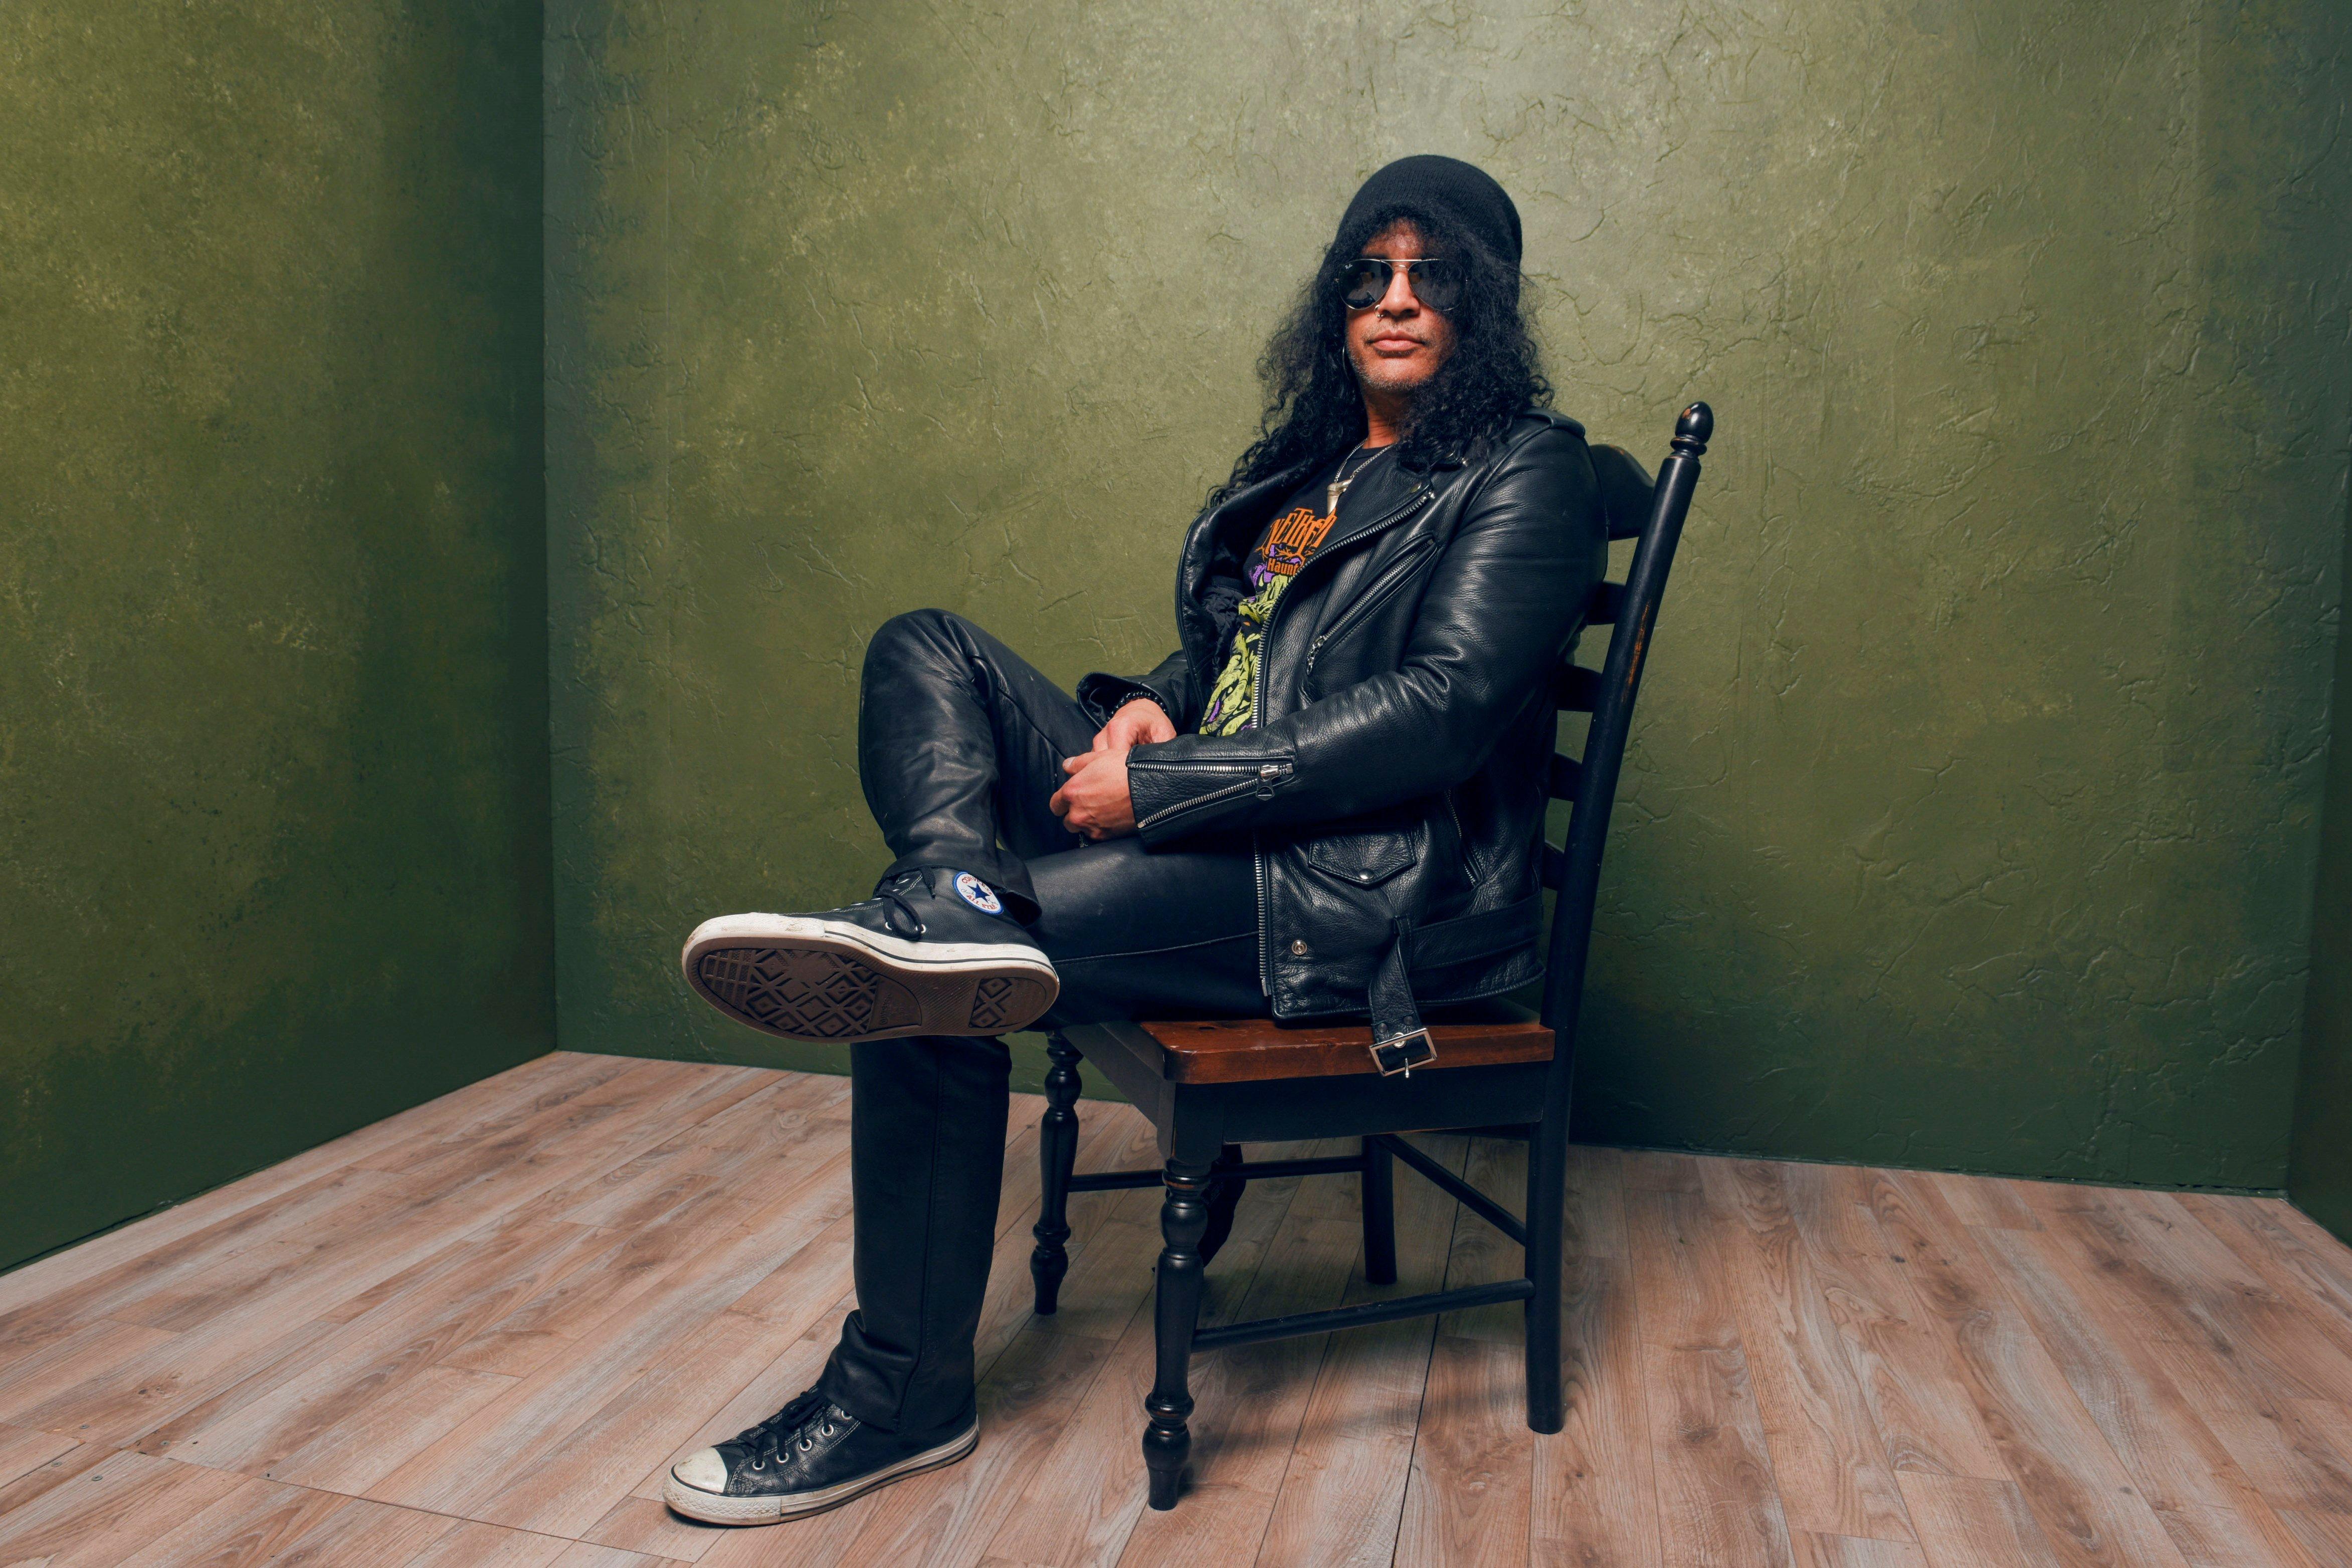 Slash photographed at Sundance Film Festival in 2015 